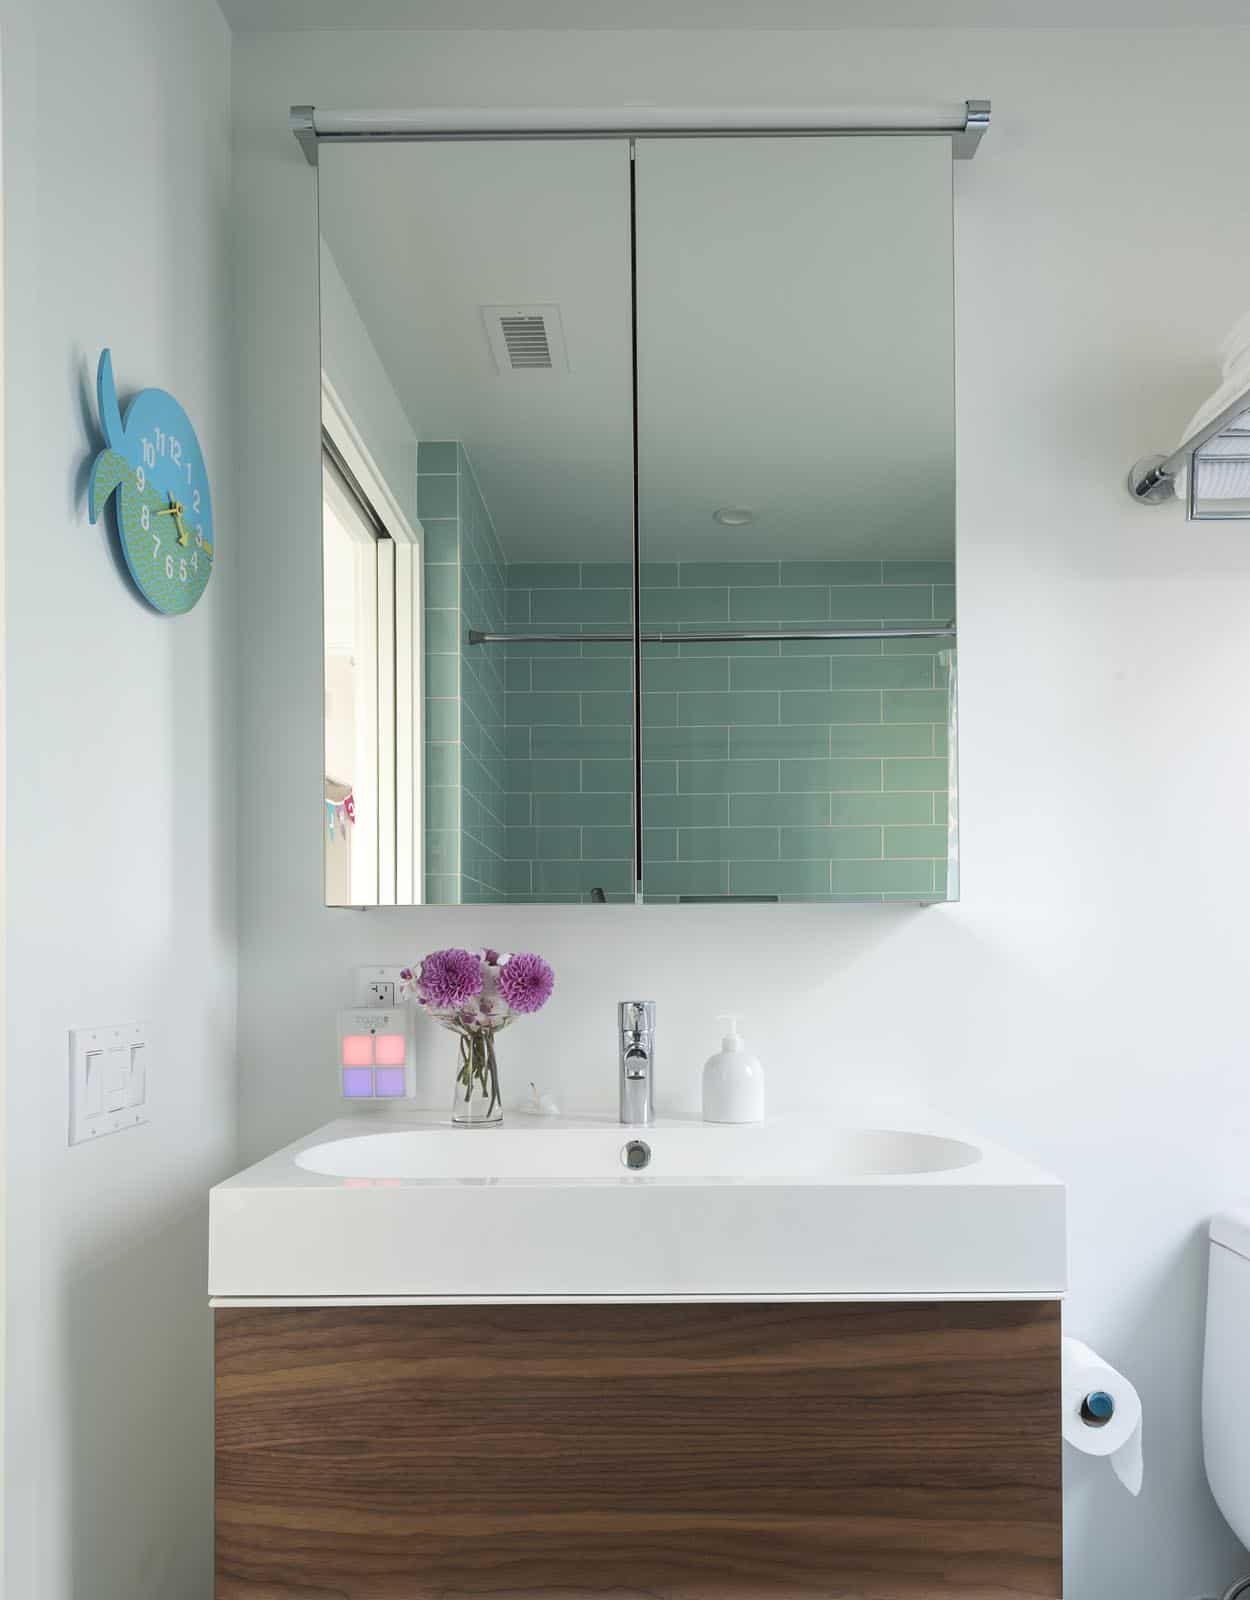 Connect 4L prefab home interior bath.